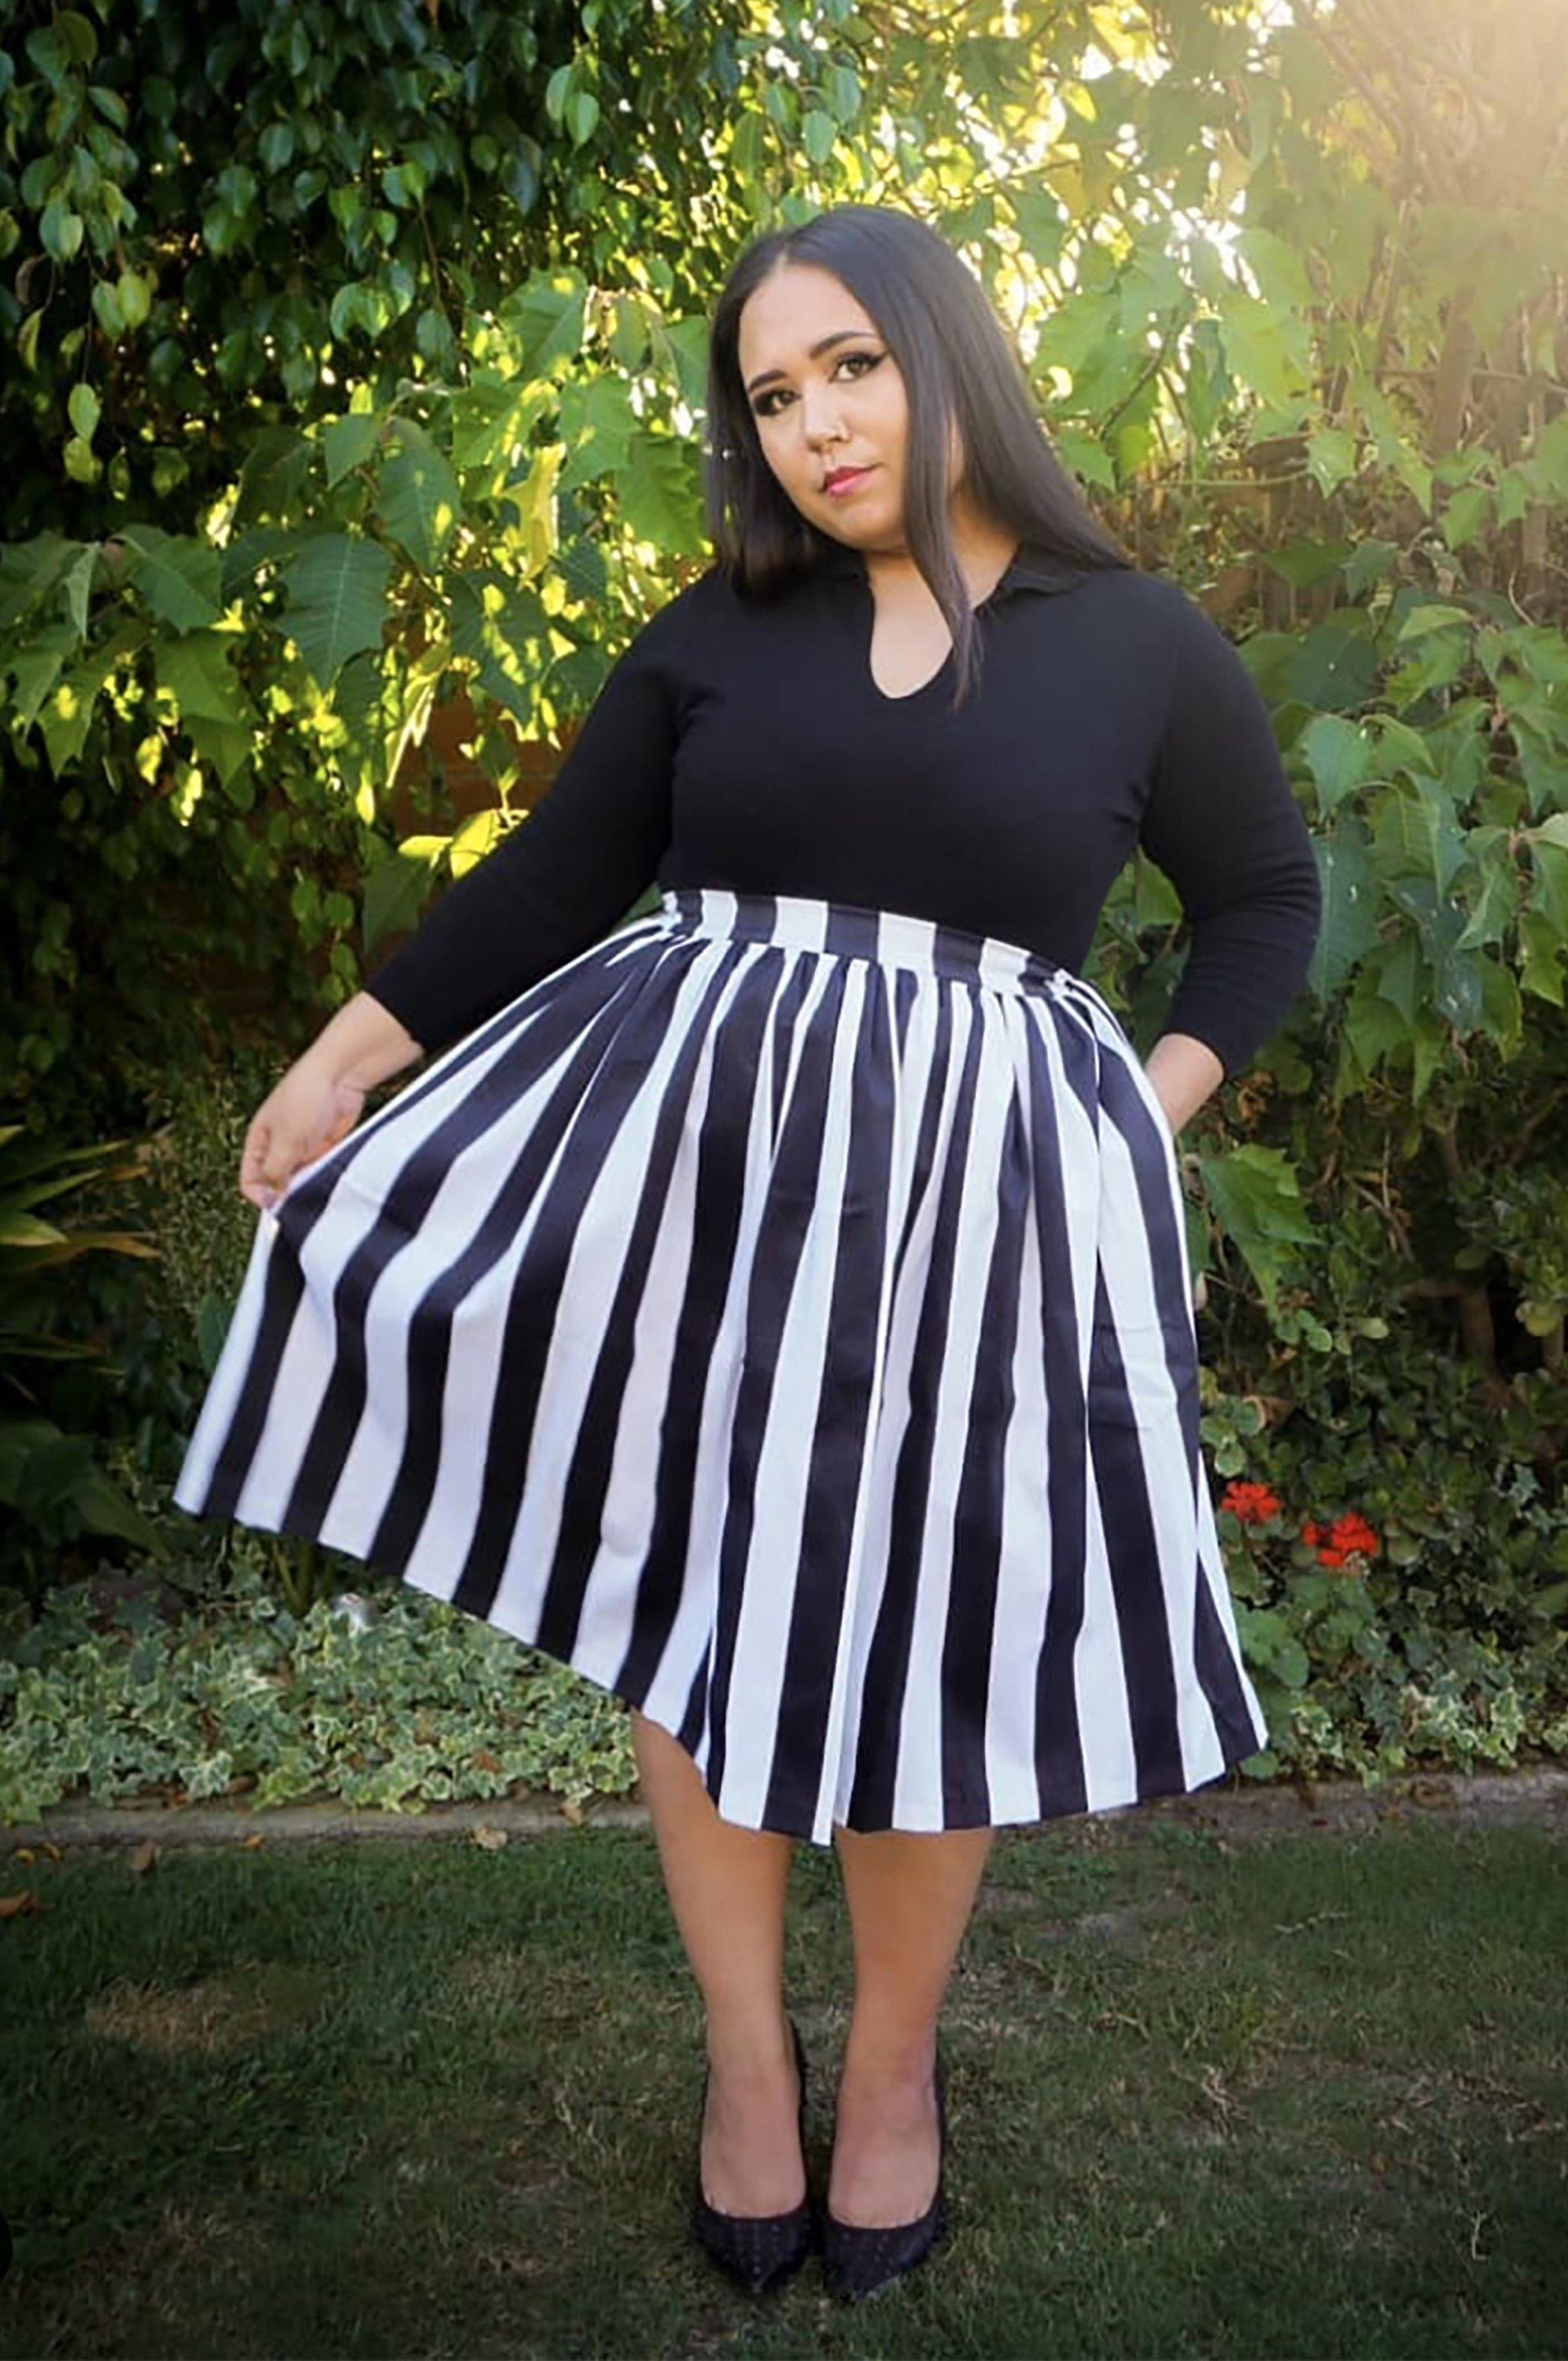 Michael Kors Plus Size Rainbow-Striped Skirt - Macy's